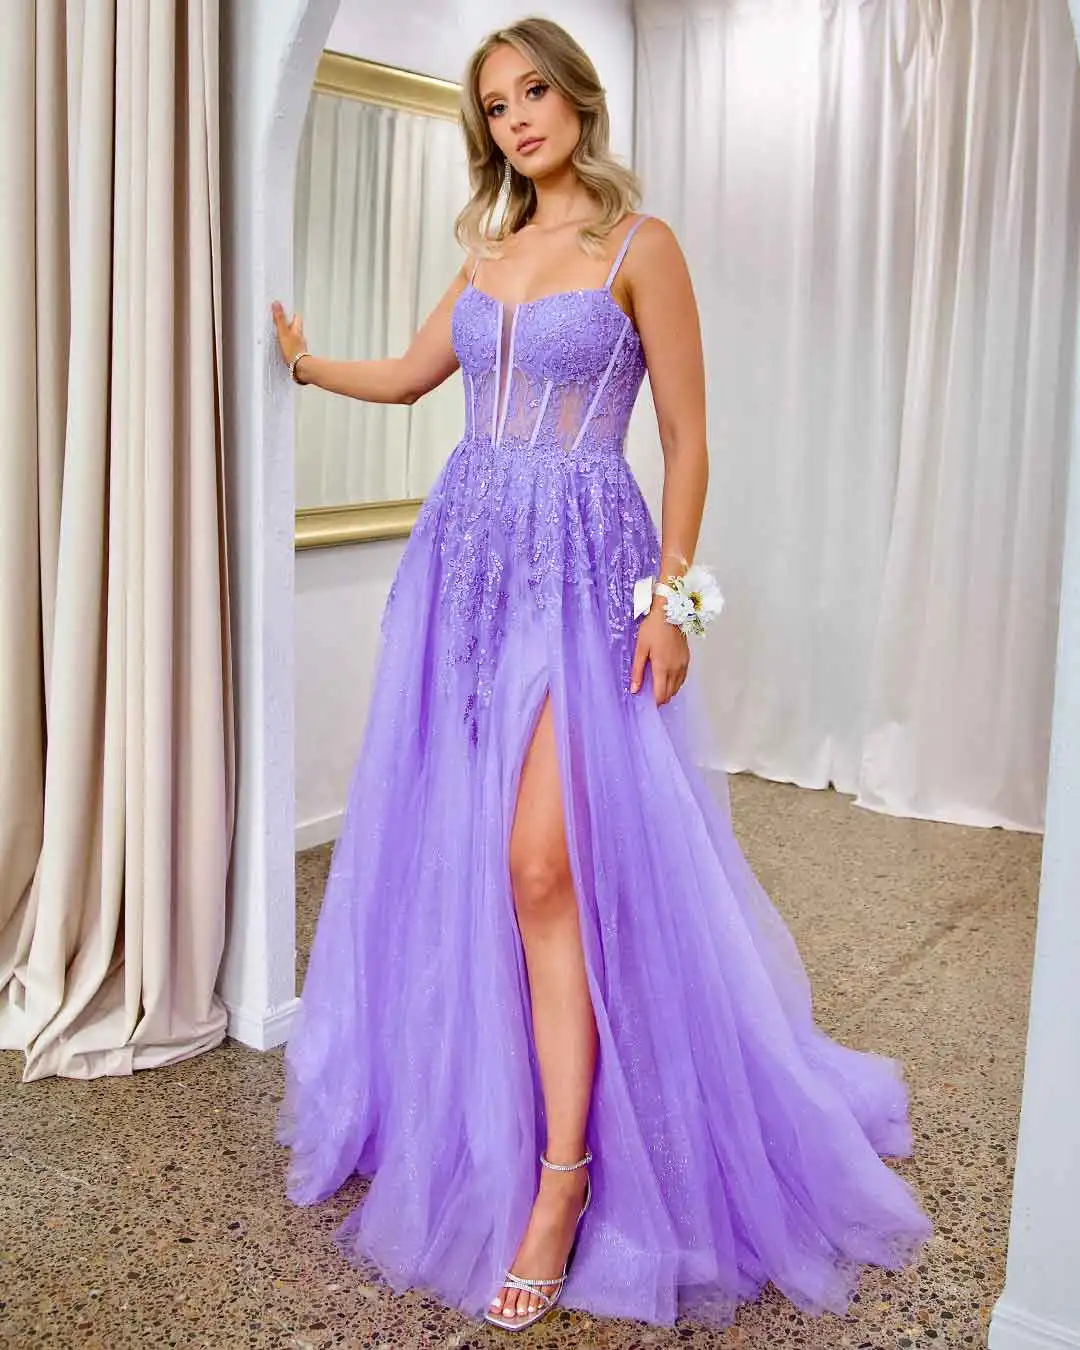 

Fine lightning Sequin Applique Tulle Prom Dresses Long Spaghetti Straps V Neck Ball Gown Glitter Formal Evening Party